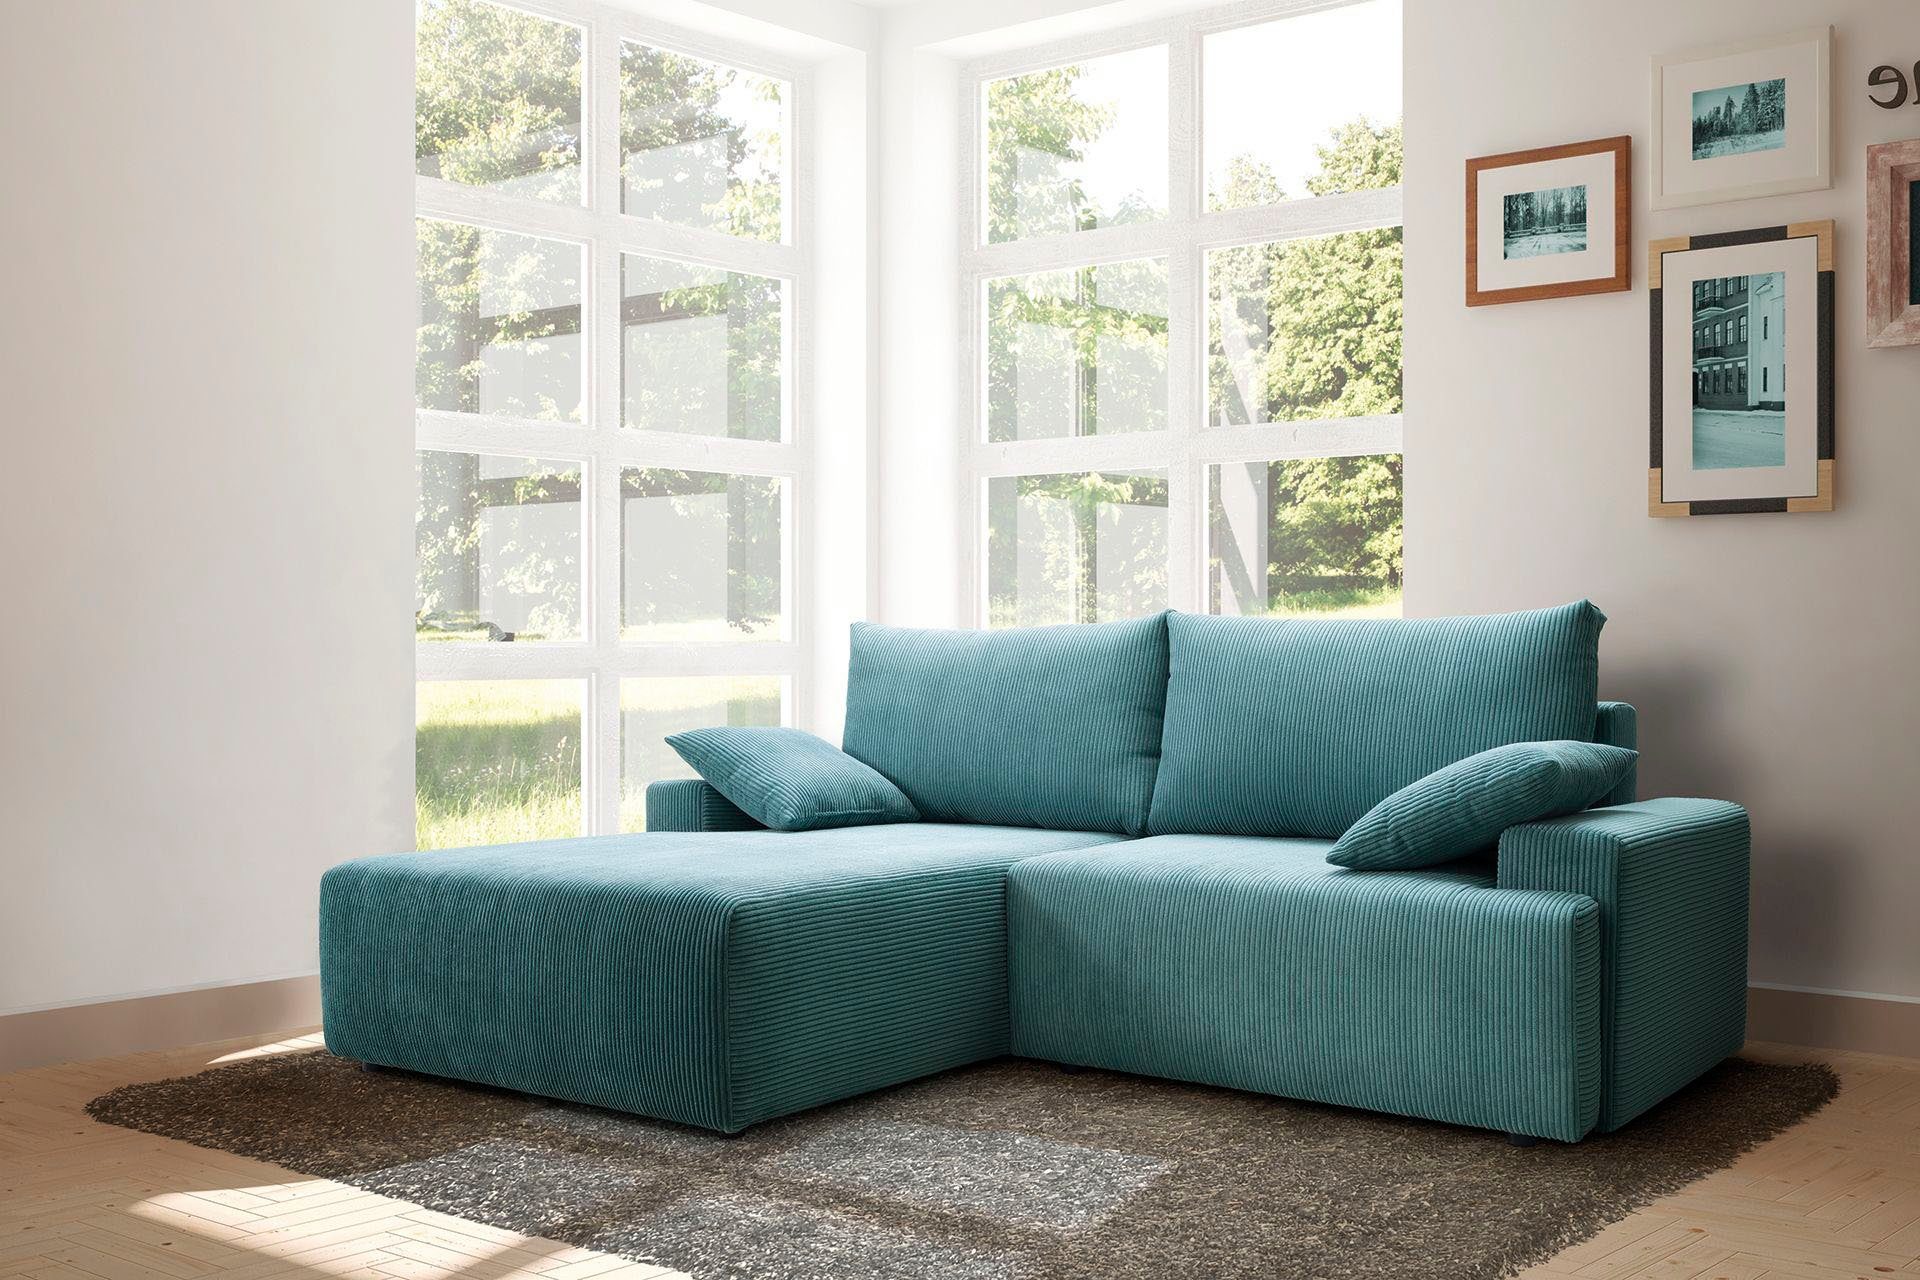 Bettfunktion Bettkasten inklusive fashion Orinoko, in sky - Cord-Farben exxpo verschiedenen sofa und Ecksofa